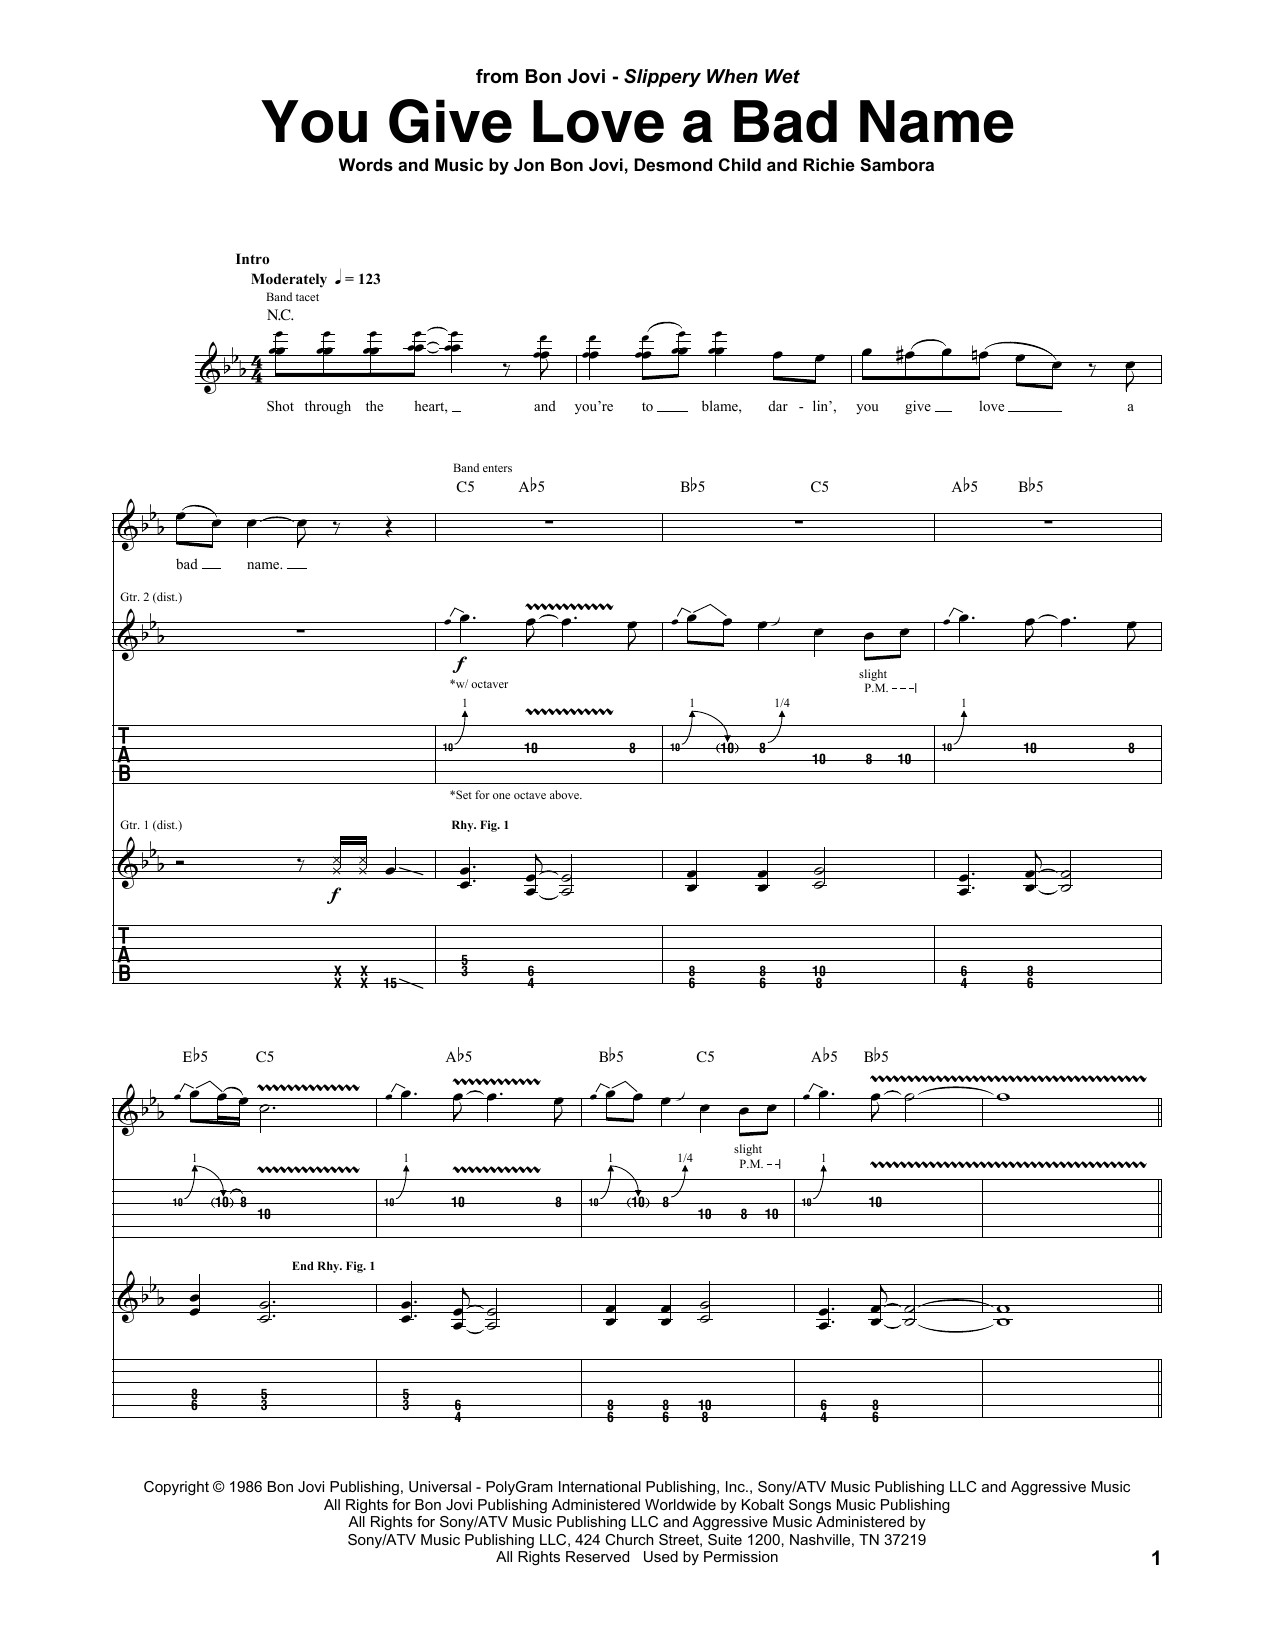 Bon Jovi You Give Love A Bad Name Sheet Music Notes & Chords for Guitar Tab - Download or Print PDF